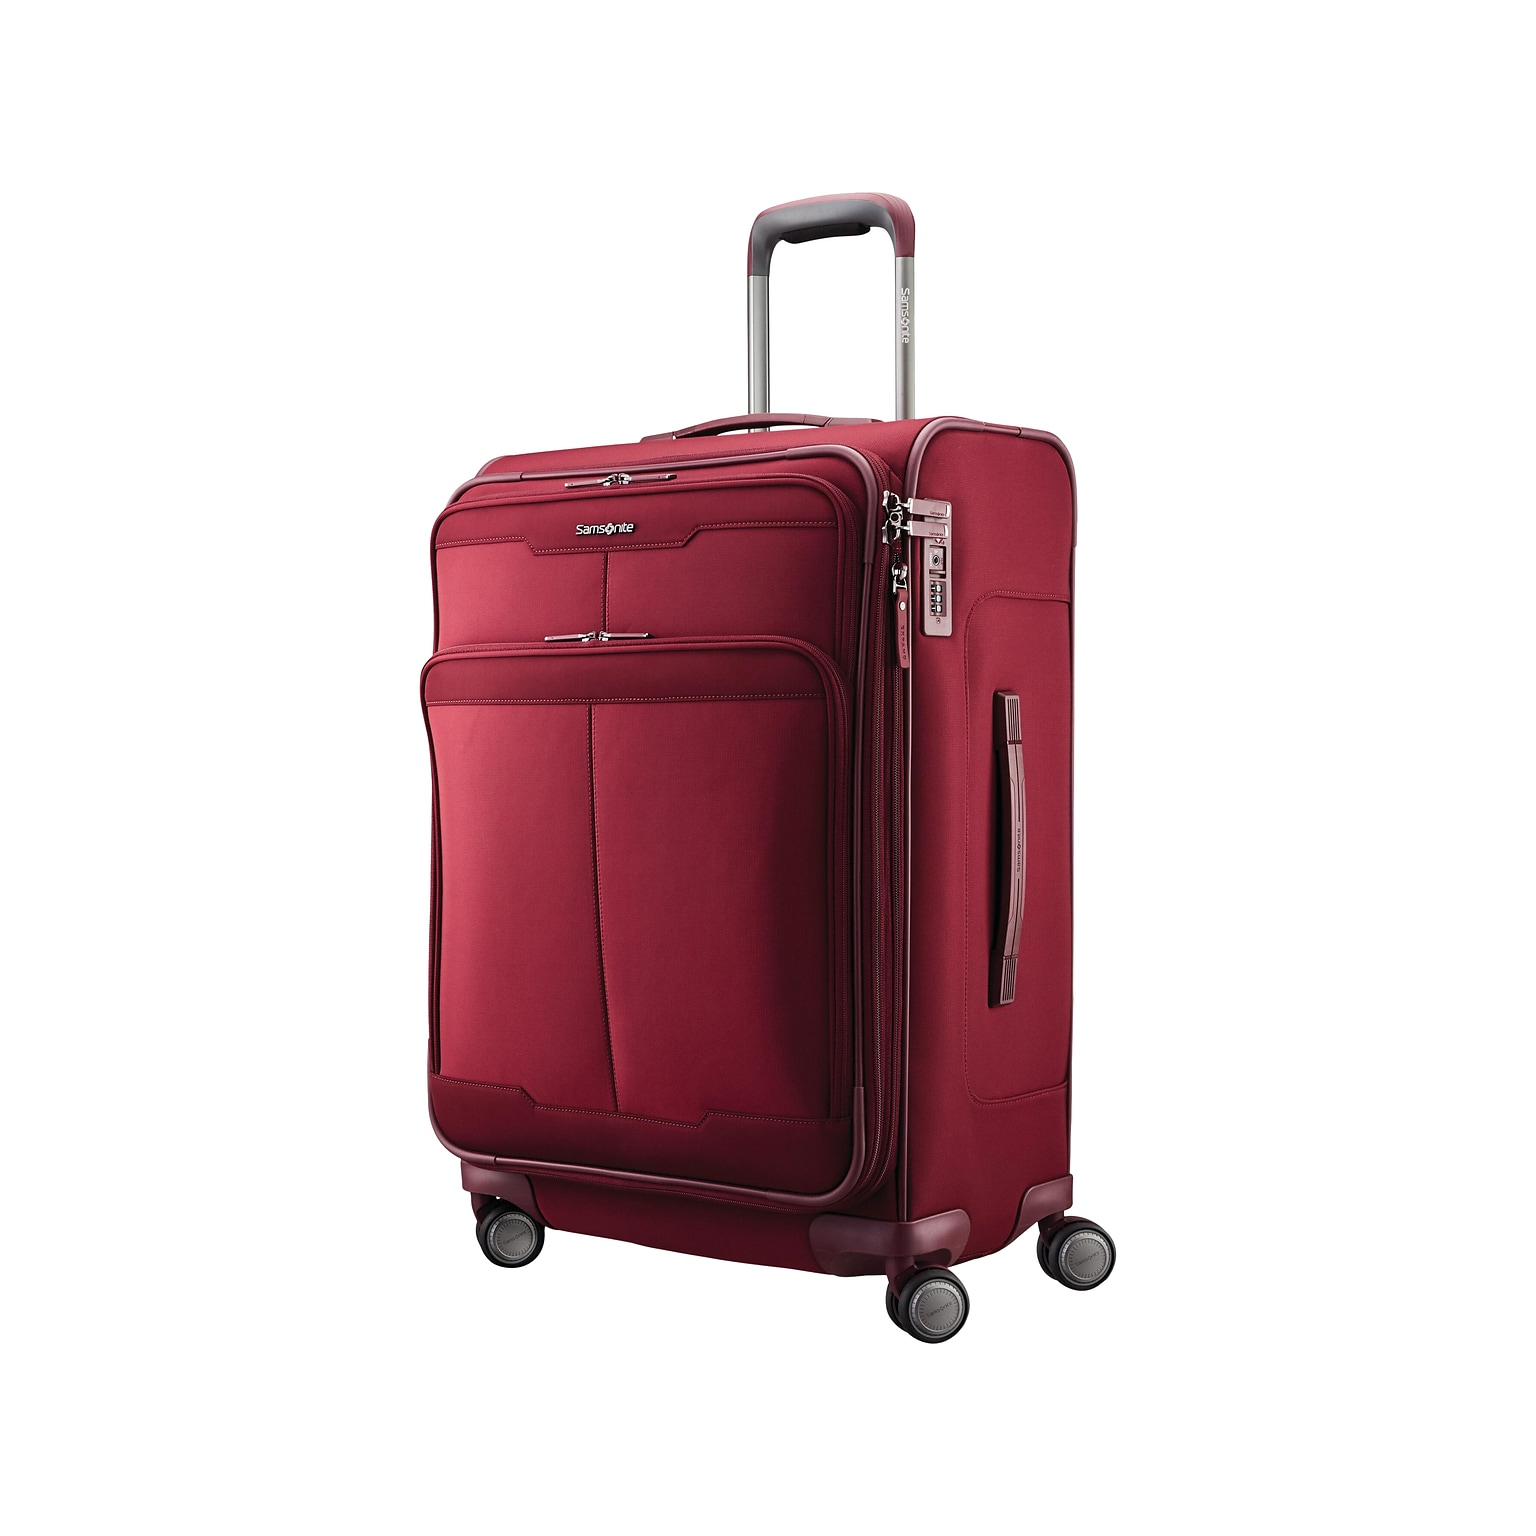 Samsonite Silhouette 17 27.5 Suitcase, 4-Wheeled Spinner, TSA Checkpoint Friendly, Merlot (139017-2136)